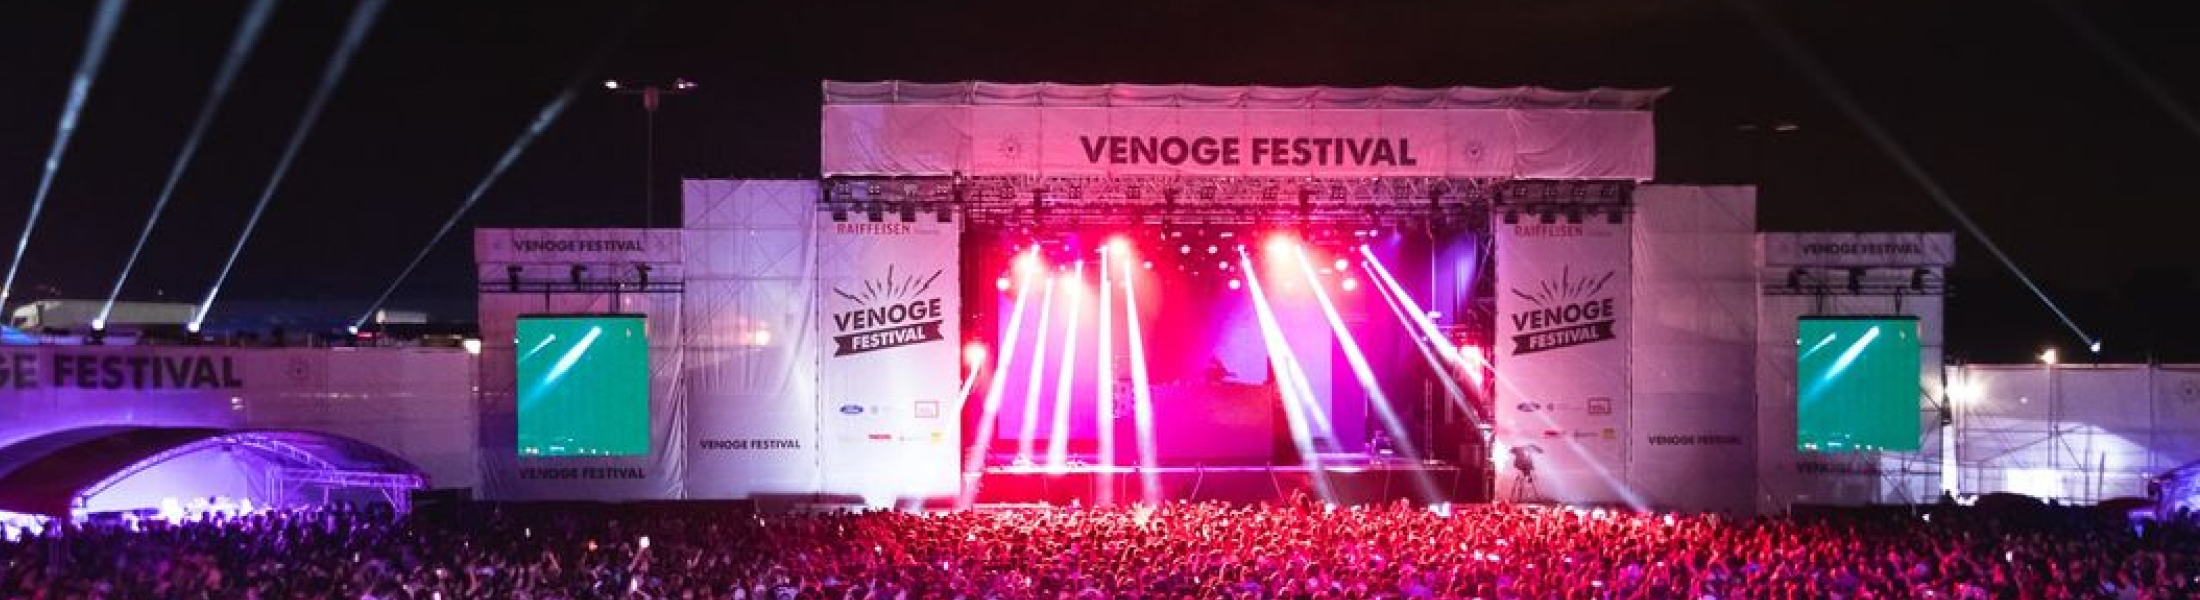 Image Venoge Festival